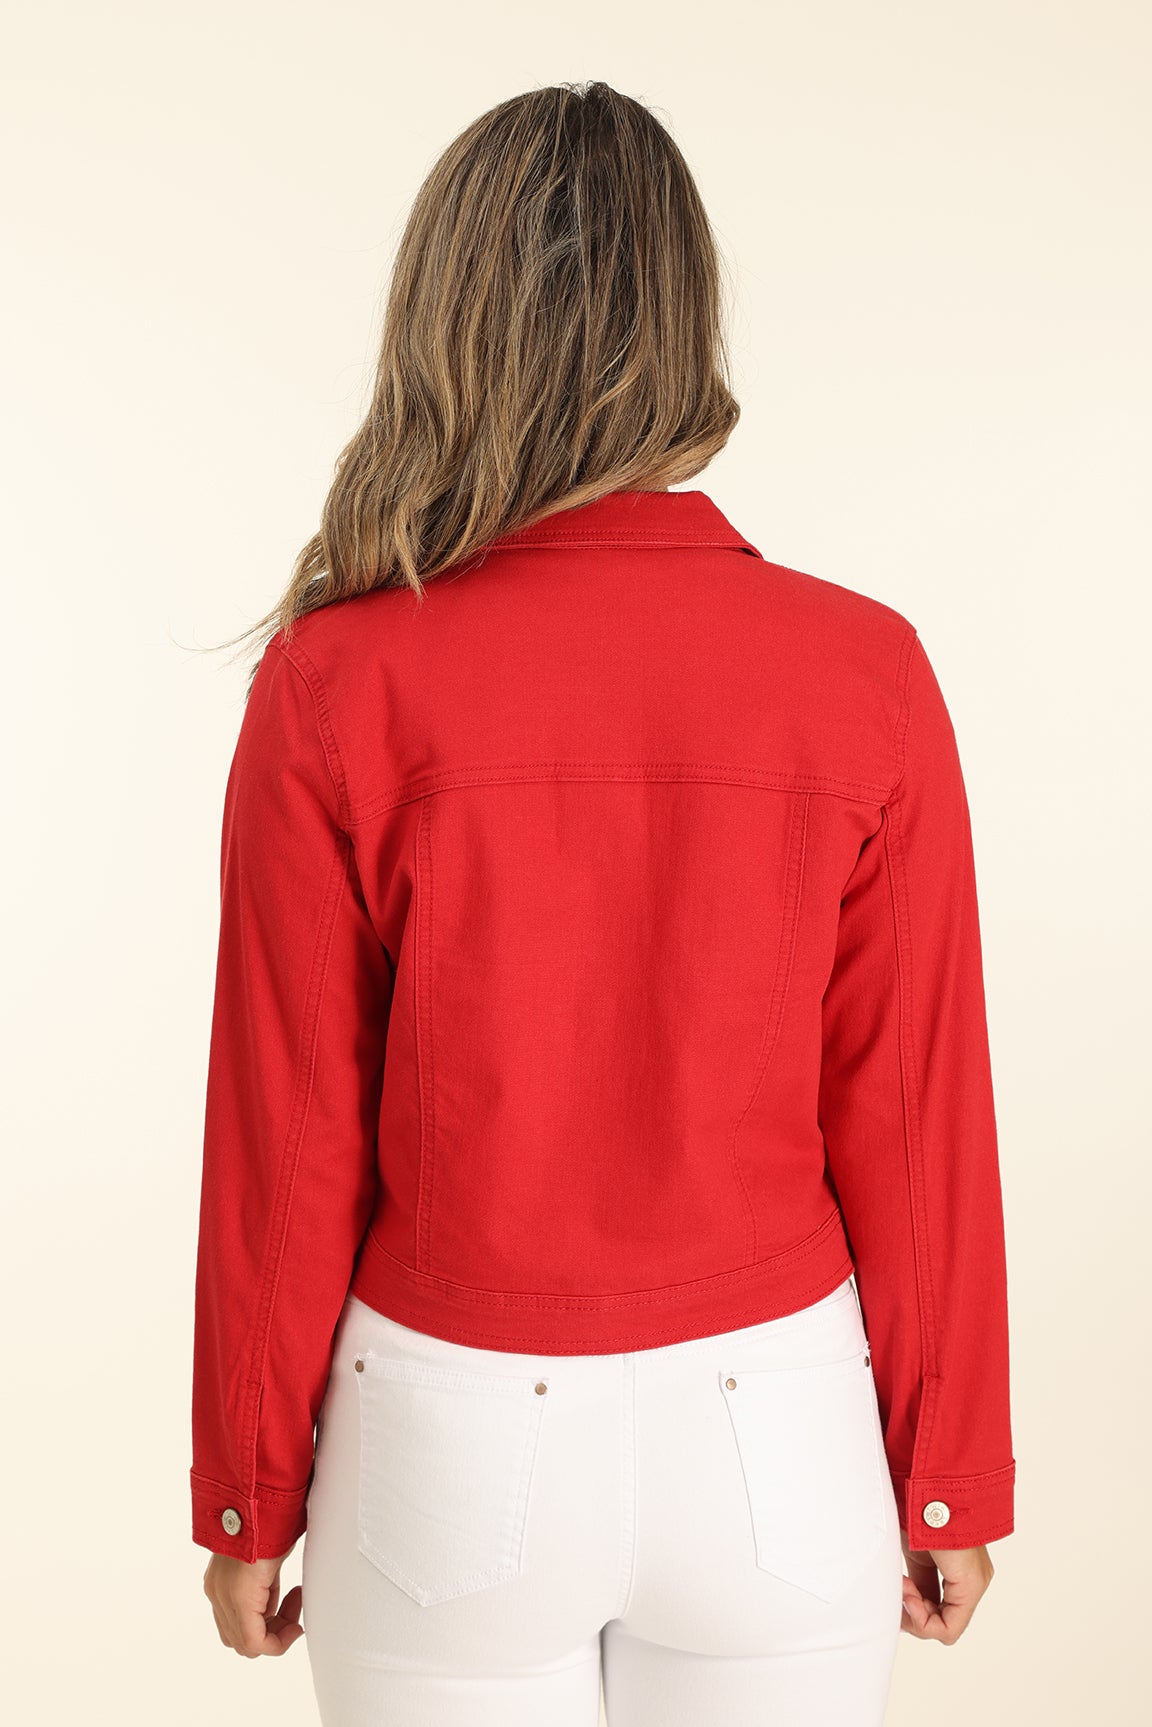 FITORON Women Leisure Coat- Denim Casual Crop Jacket Collared Solid Long  Sleeve Cardigan Jacket Red - Walmart.com